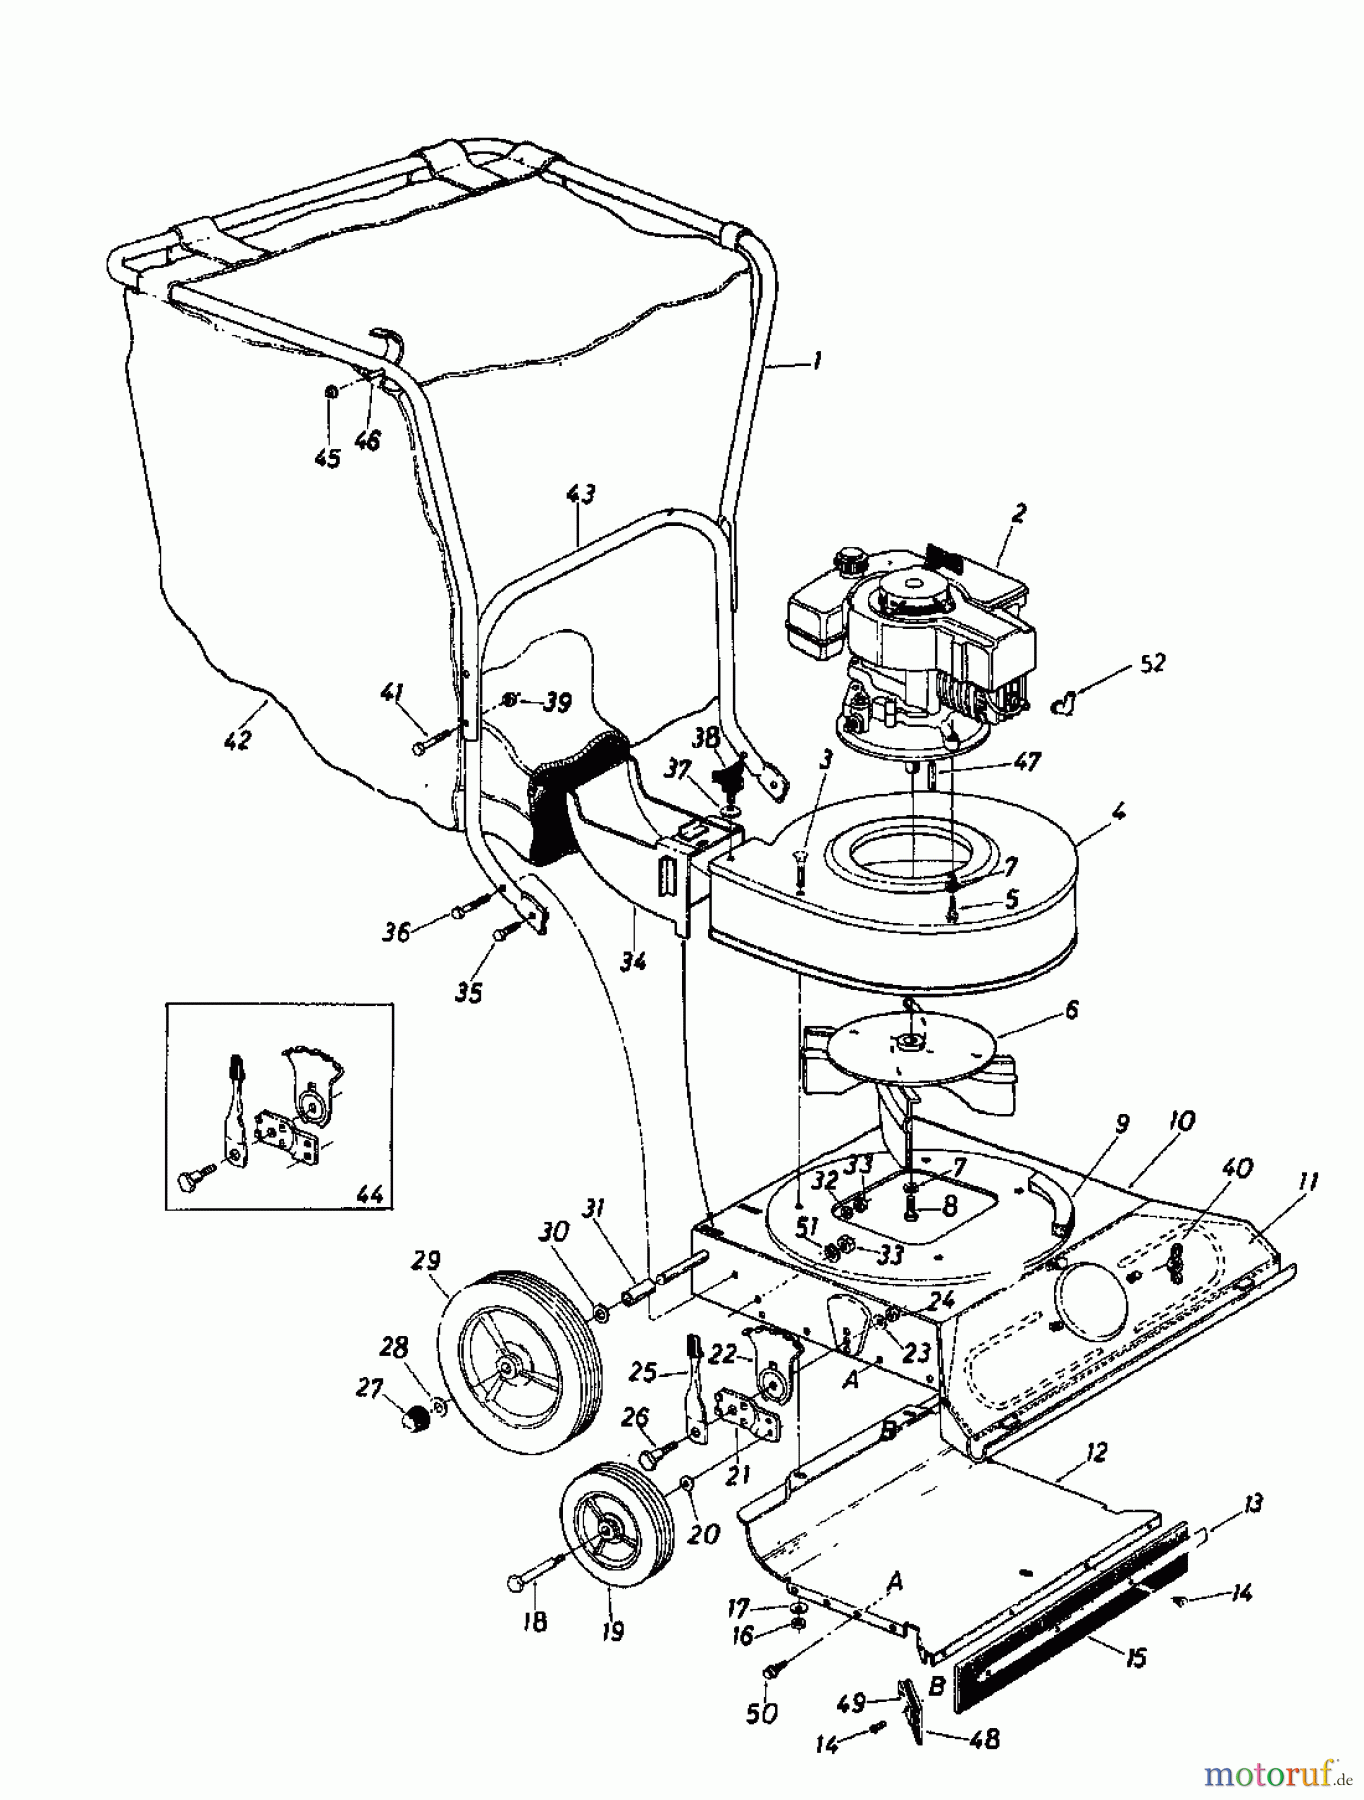  MTD Leaf blower, Blower vac Air-Vac 660 247-6600  (1987) Basic machine